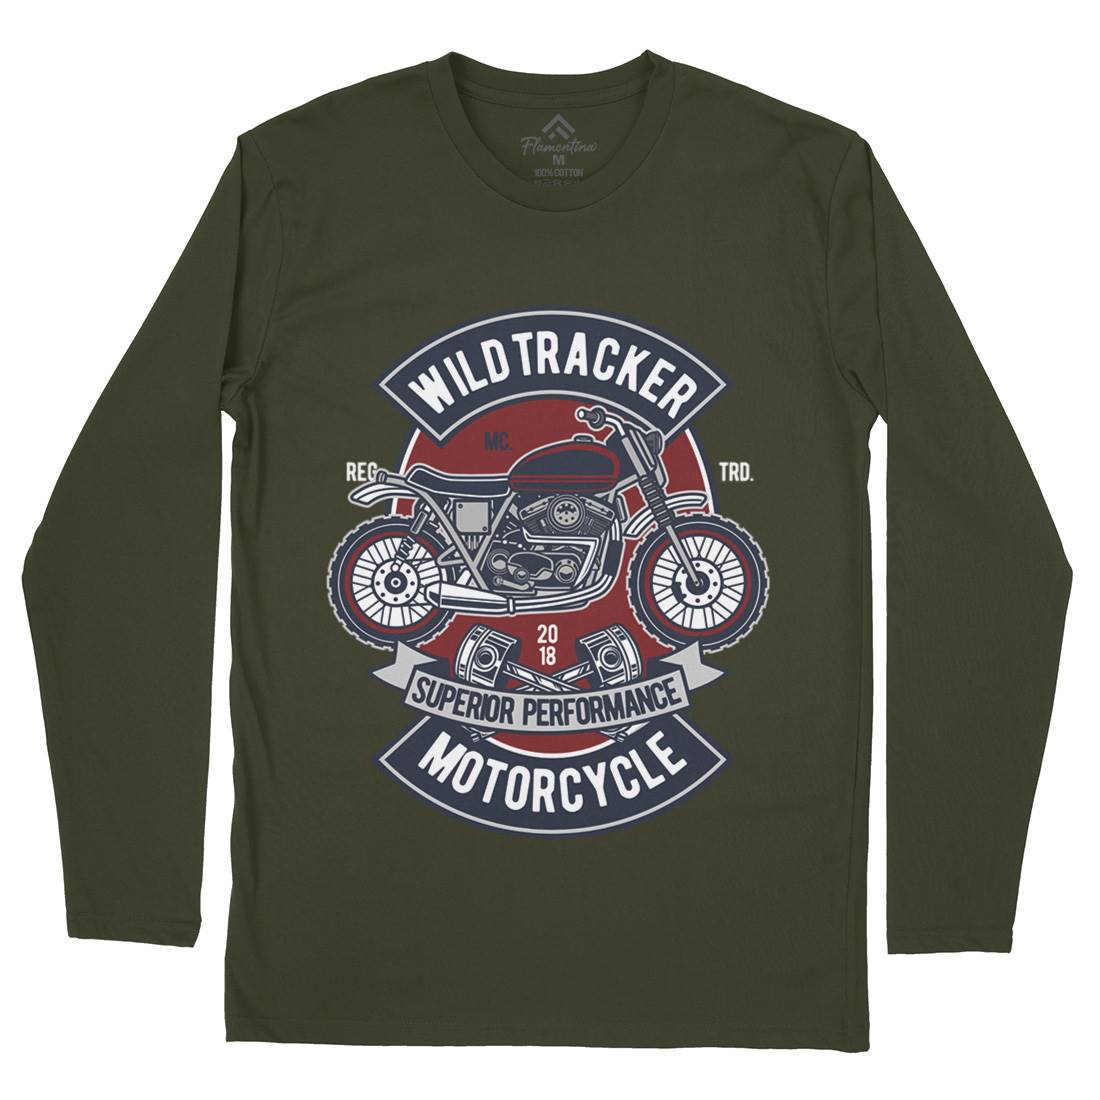 Wild Tracker Mens Long Sleeve T-Shirt Motorcycles D598